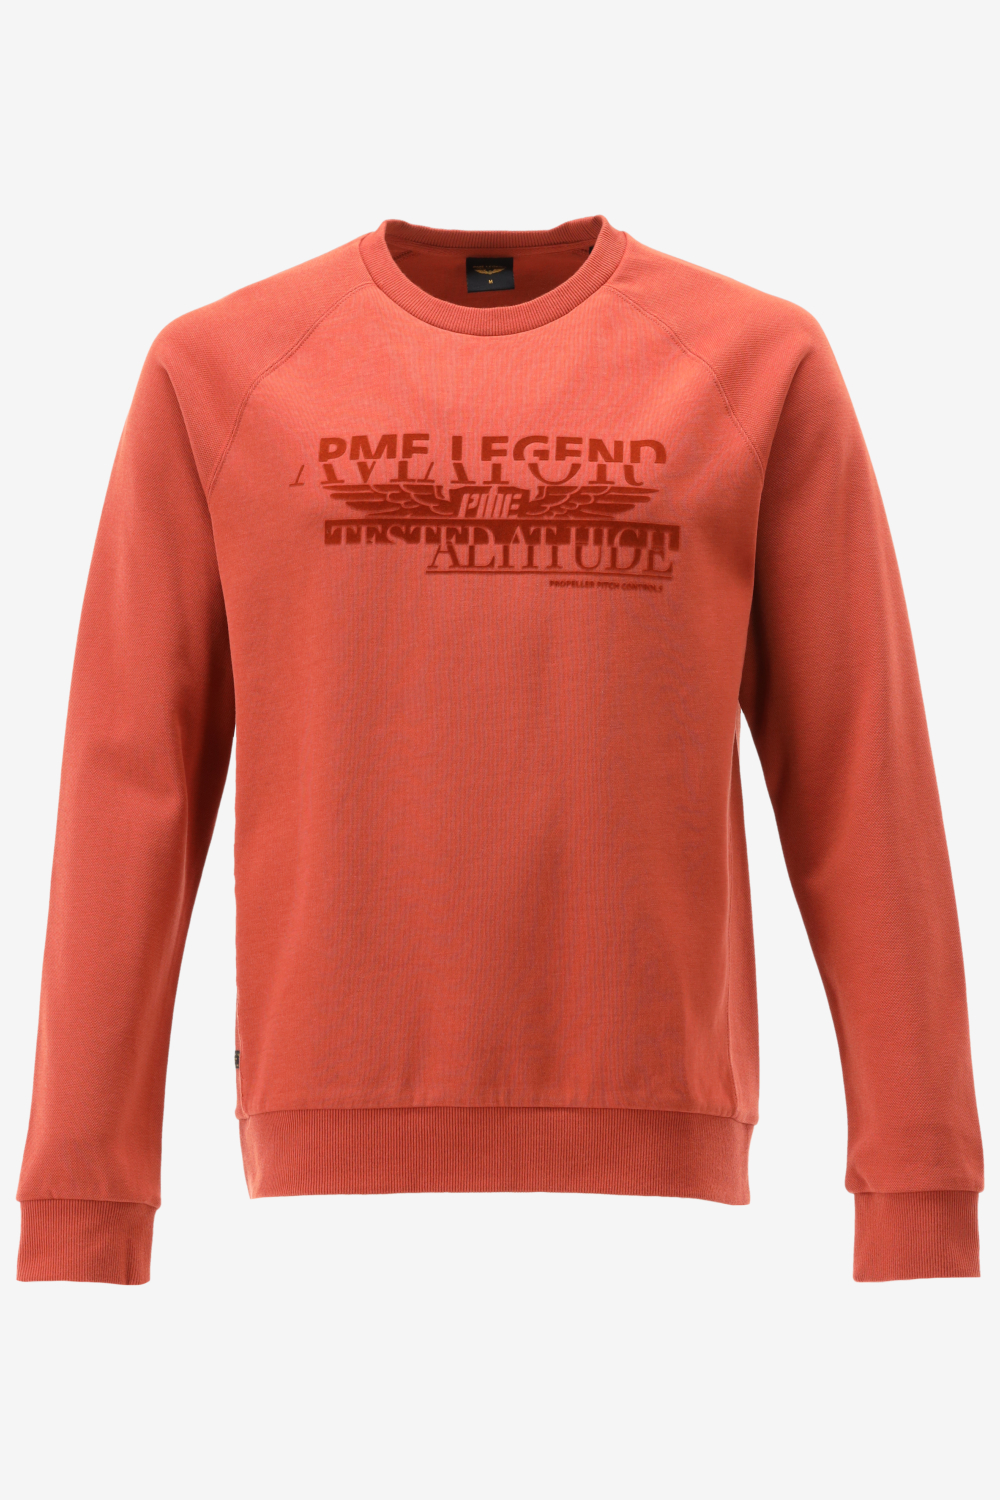 Pme legend sweater maat XL